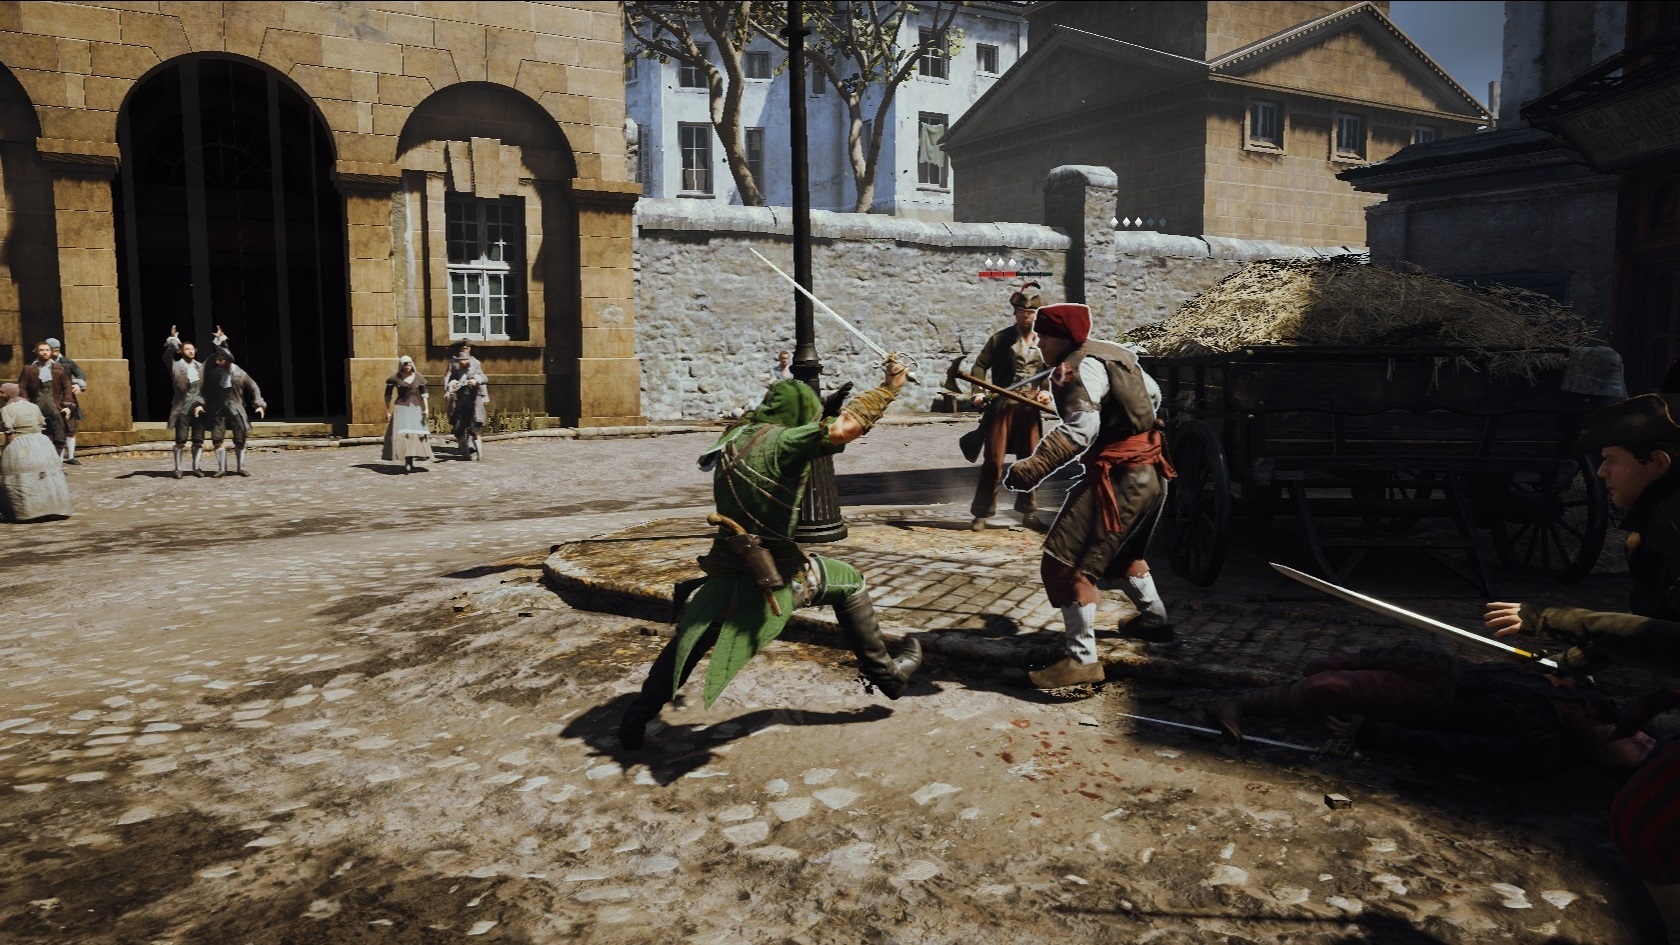 Assassin's Creed: Unity Boje s nron a s hlavne doporuen len ako vchodisko z ndze.